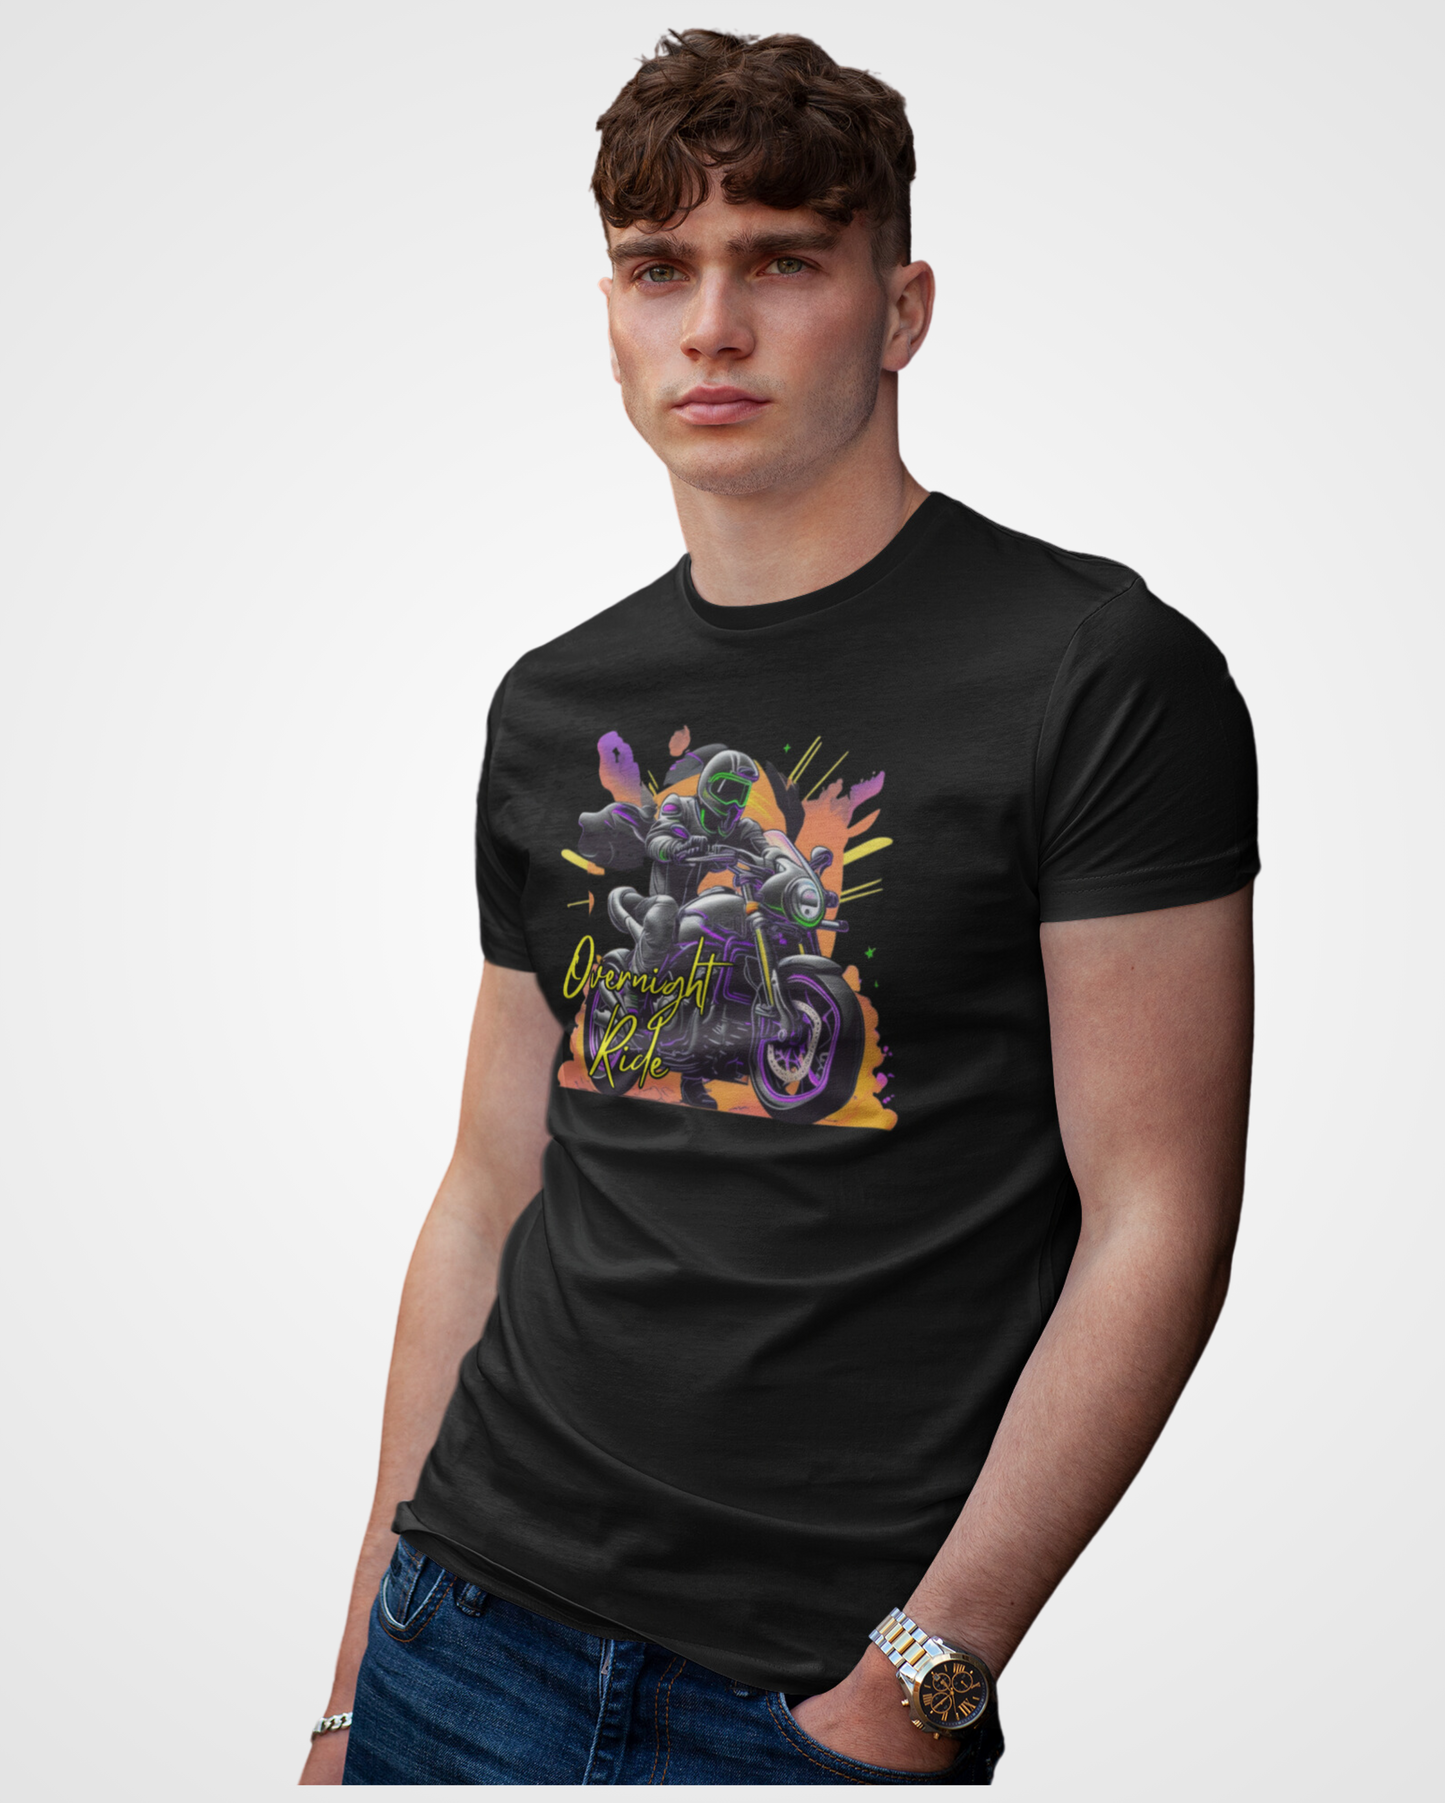 Men's OverNight Ride Graphic Printed T-shirt - Lama Fashion